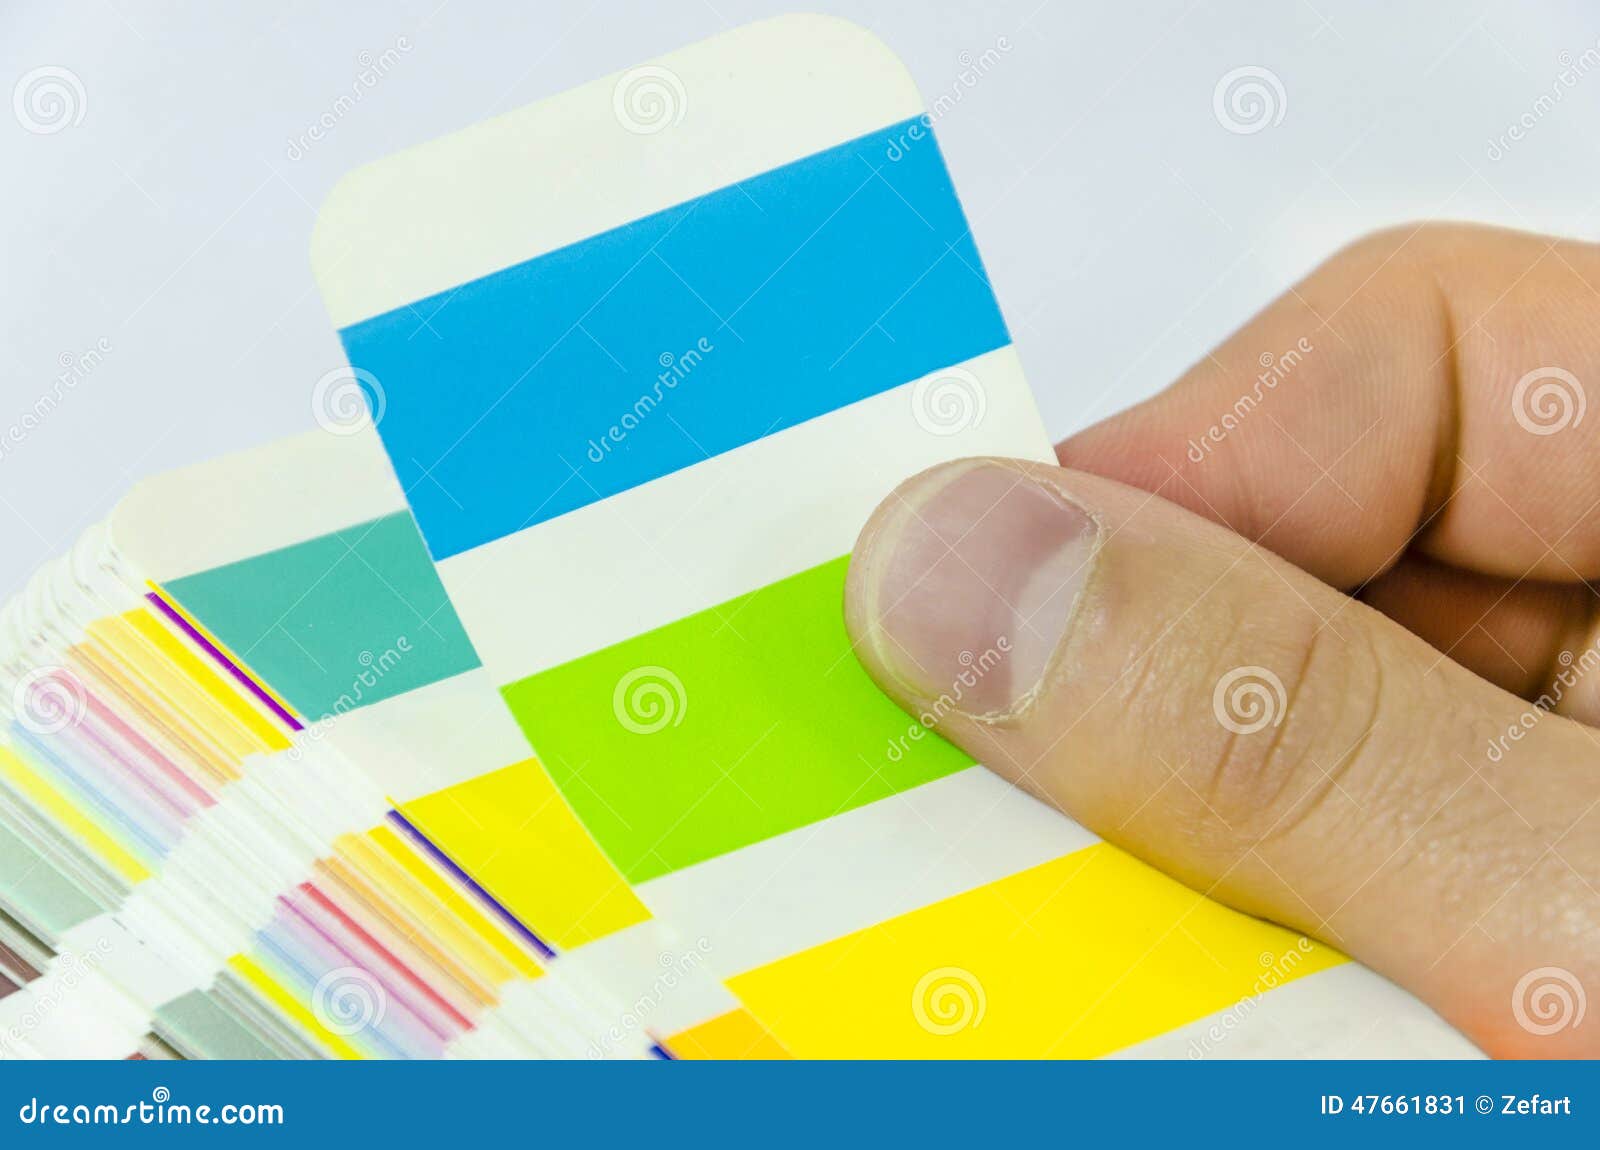 Pantone System. Color Samples. Color Palette. Cardboard Cards with